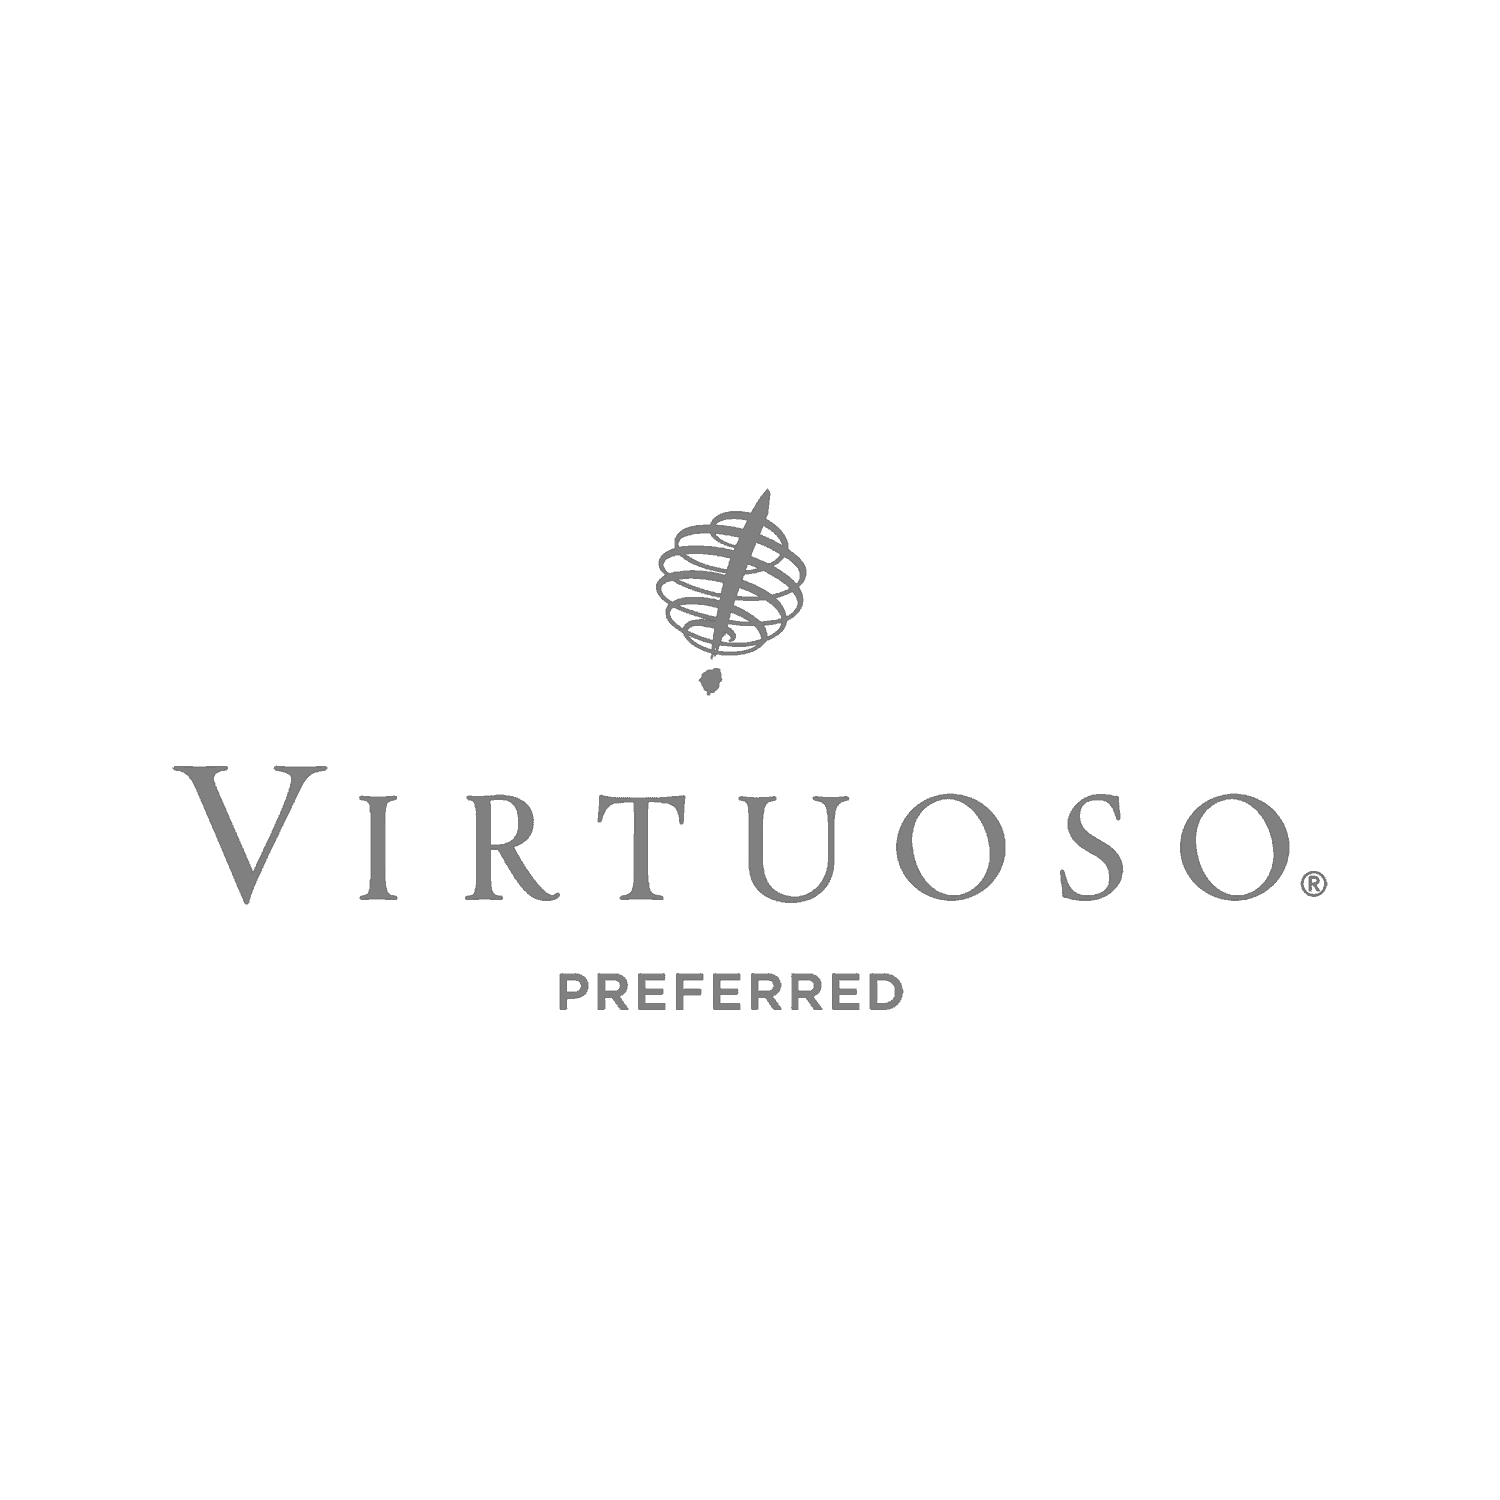 Virtuoso preffered logo 